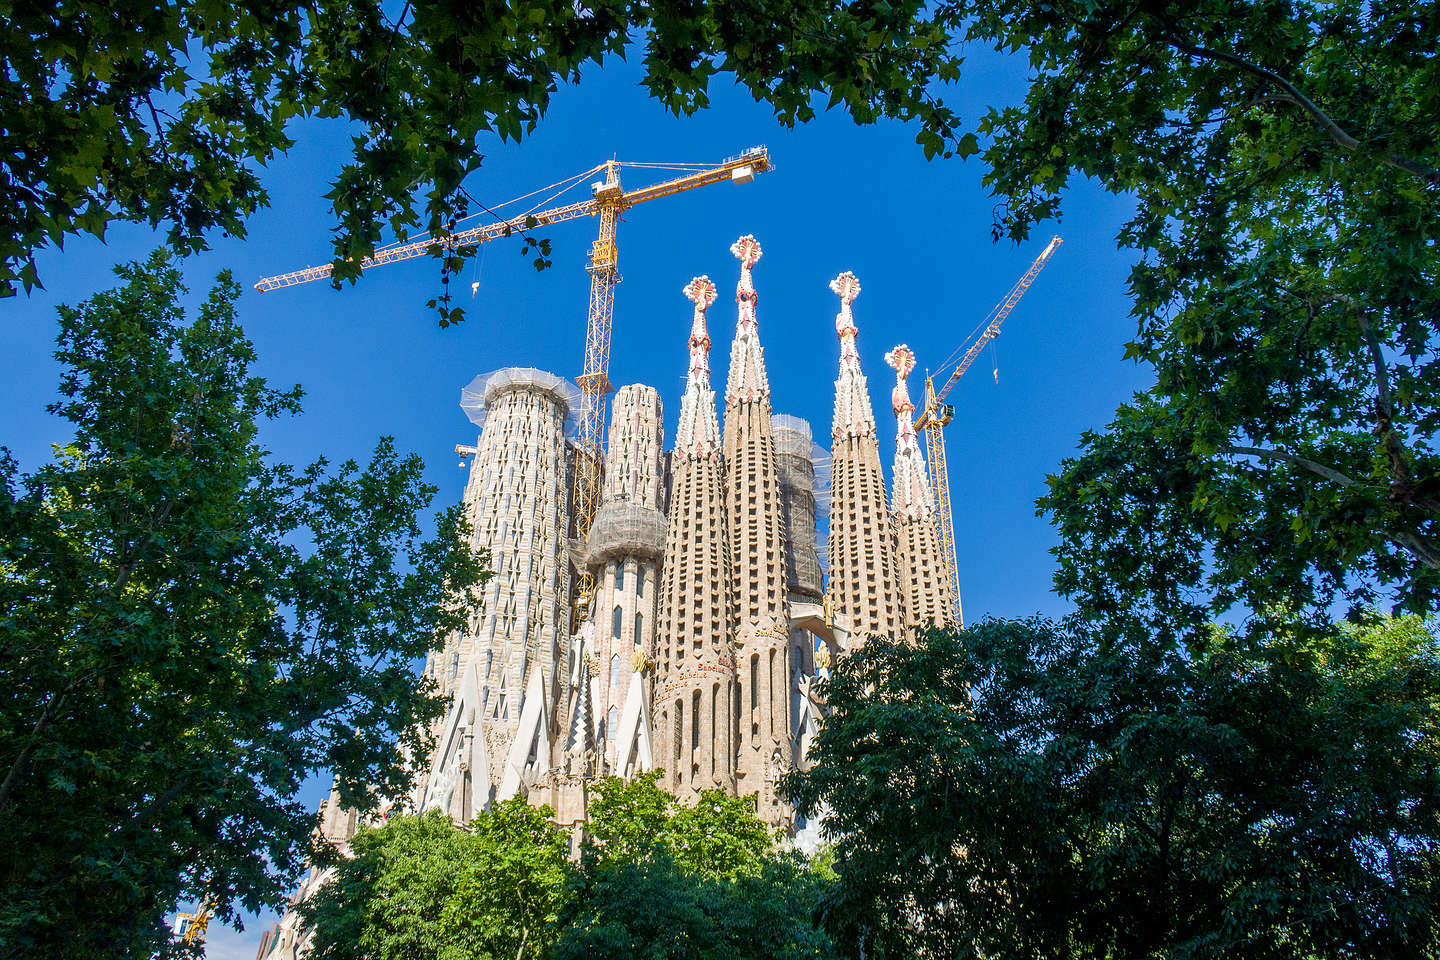 One last view of the Sagrada Familia